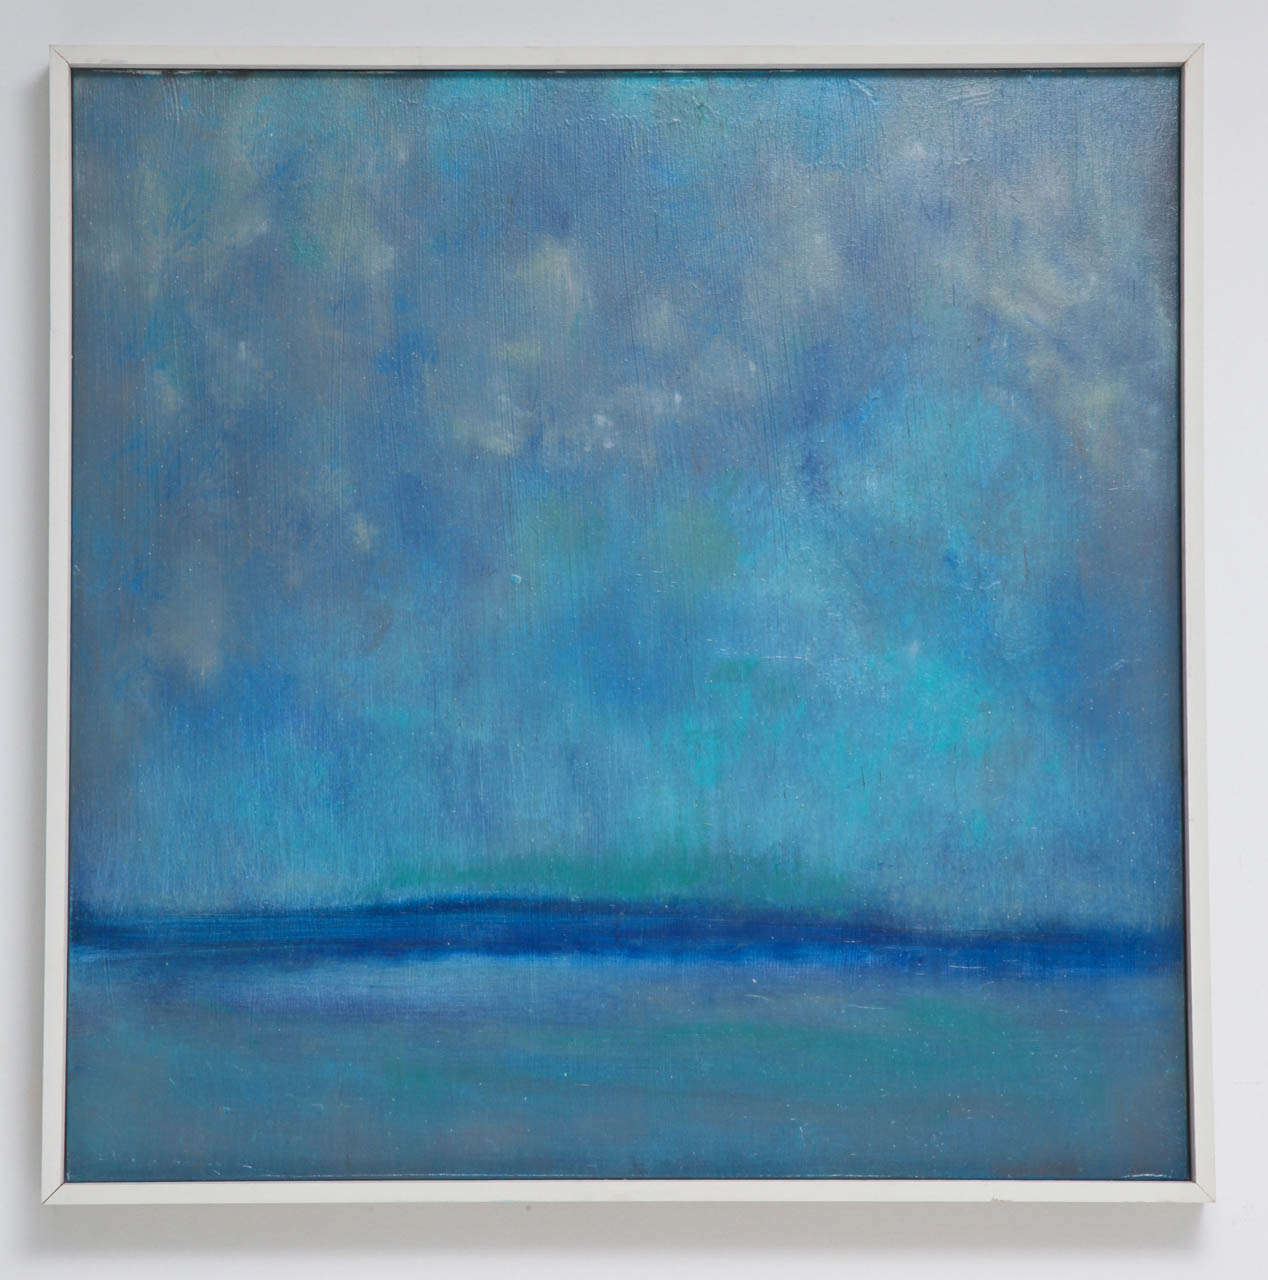 atmospheric landscape painting
oil on linen 
30 x 30